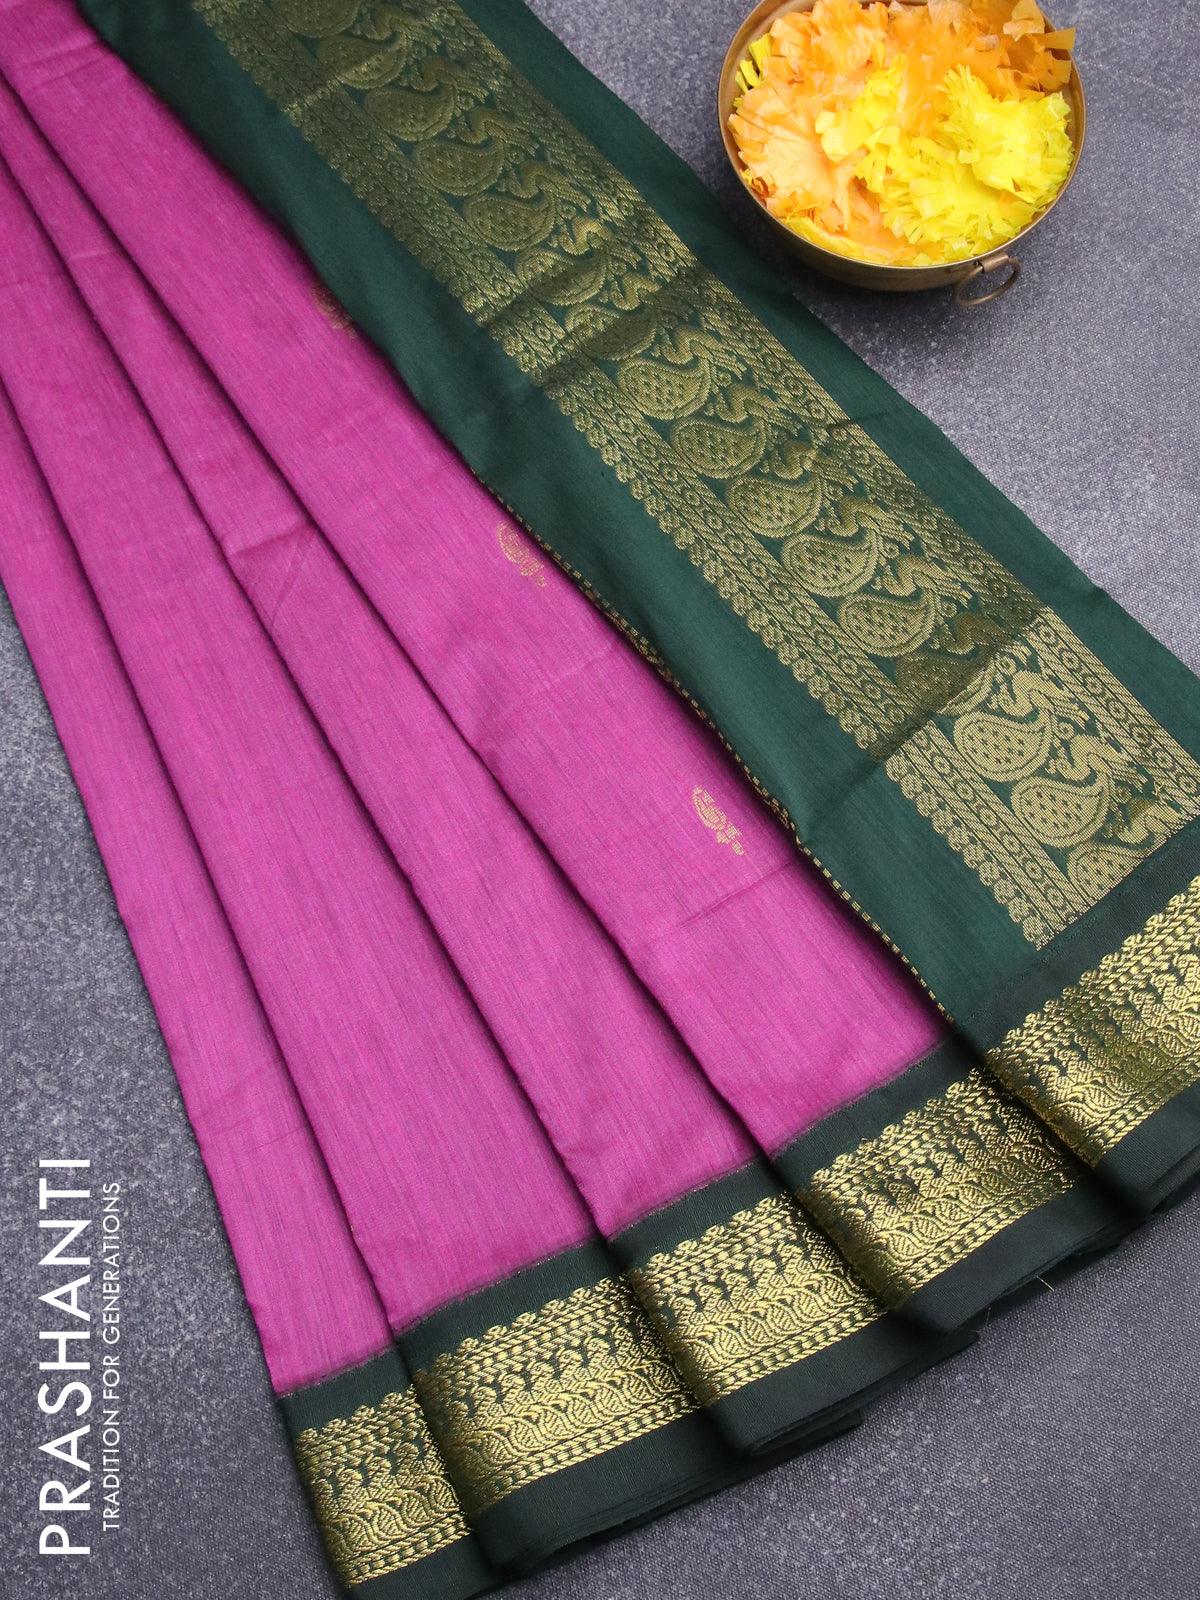 Kalyani cotton saree magenta pink and dark green with zari woven